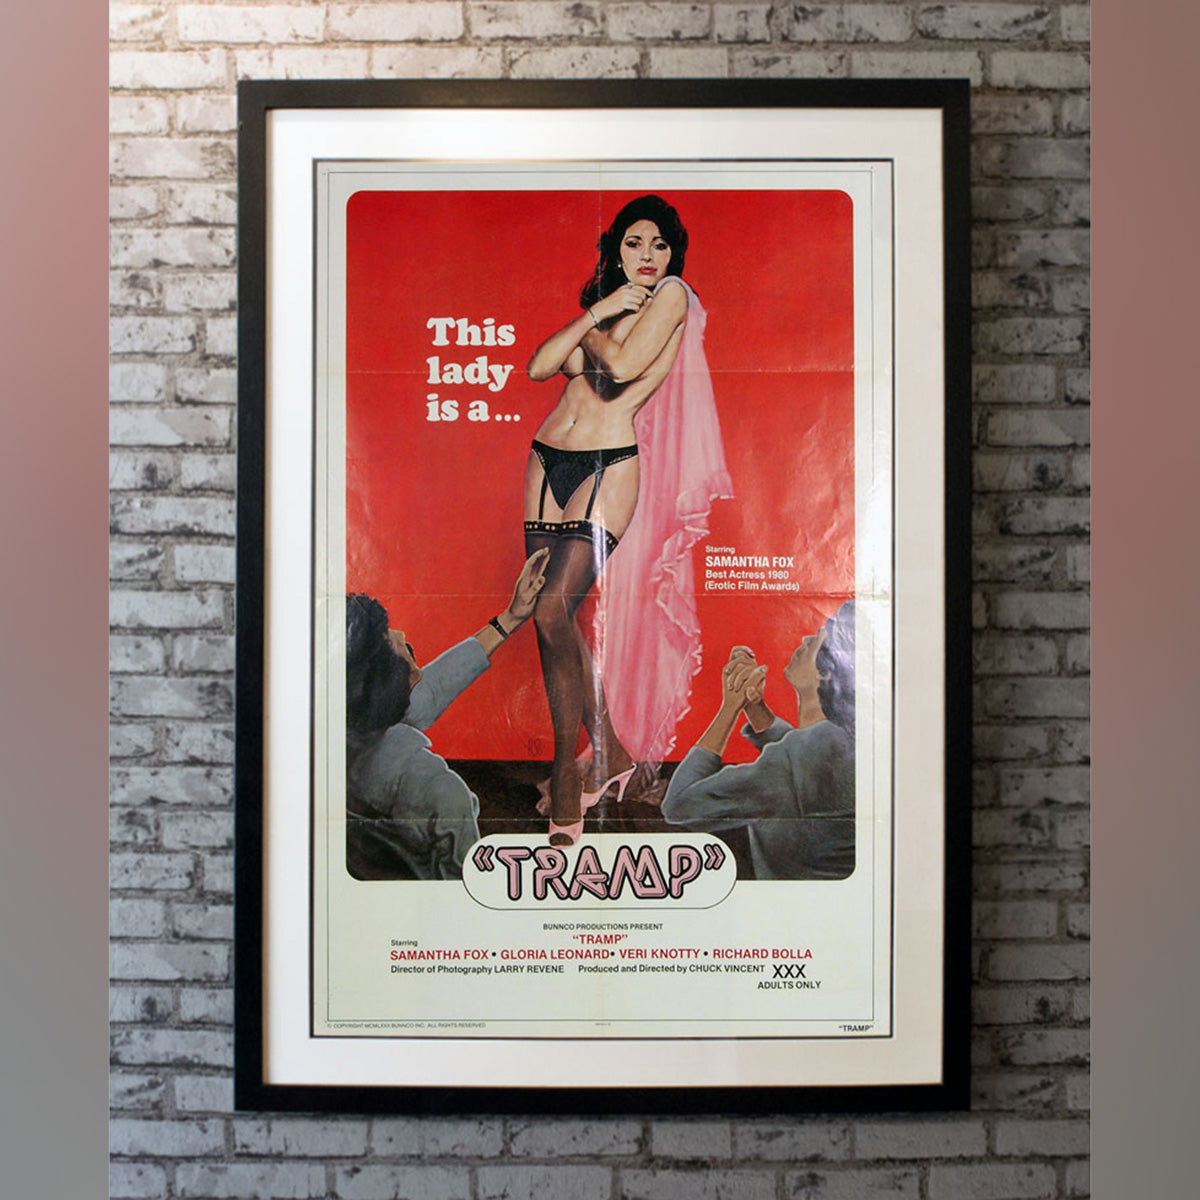 Original Movie Poster of Tramp (1980)